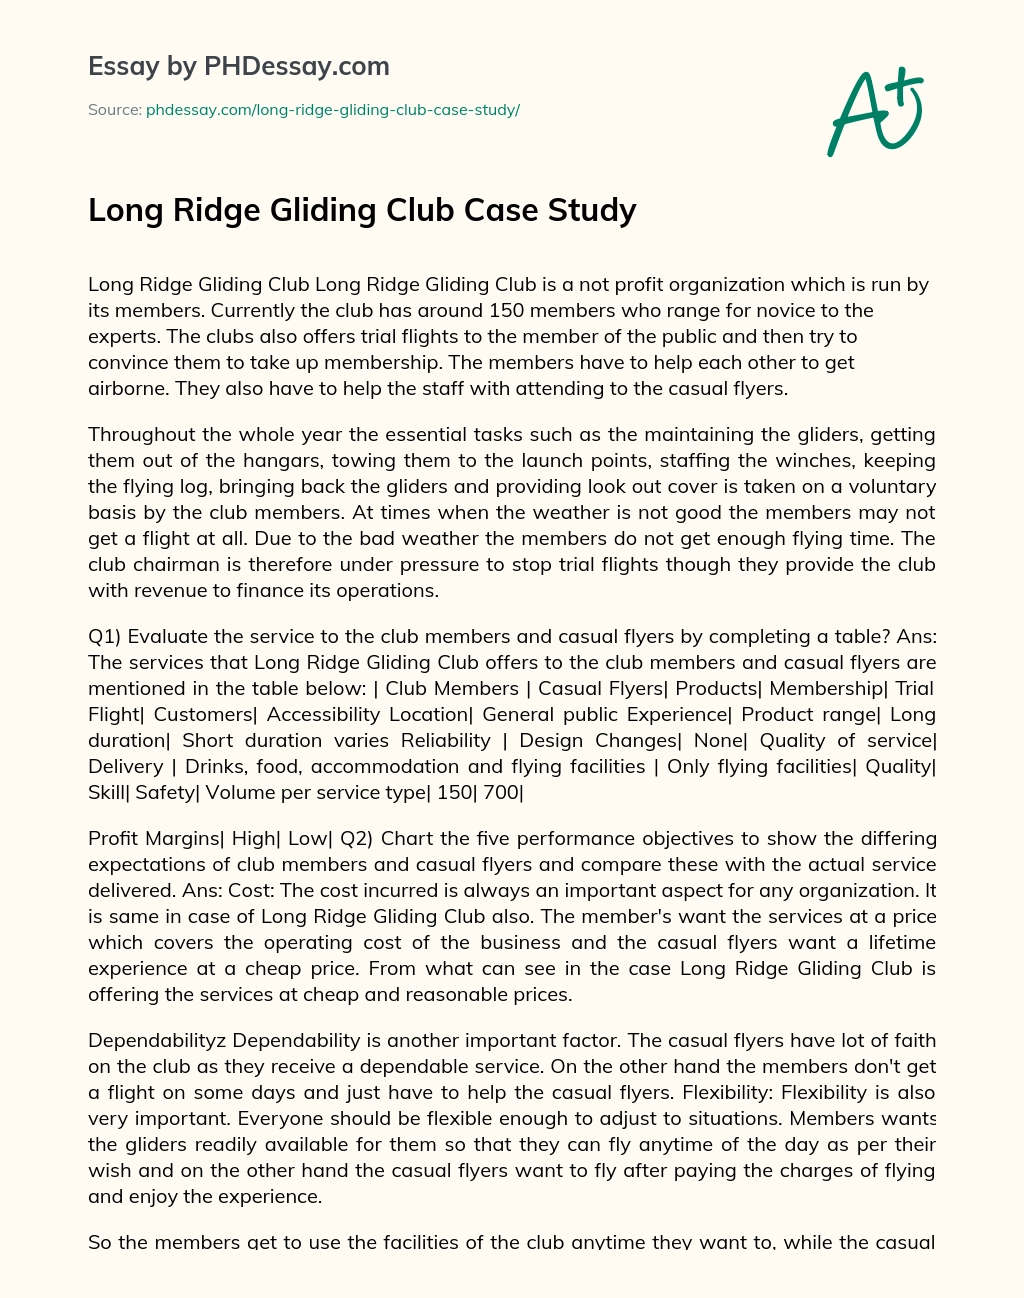 Long Ridge Gliding Club Case Study essay